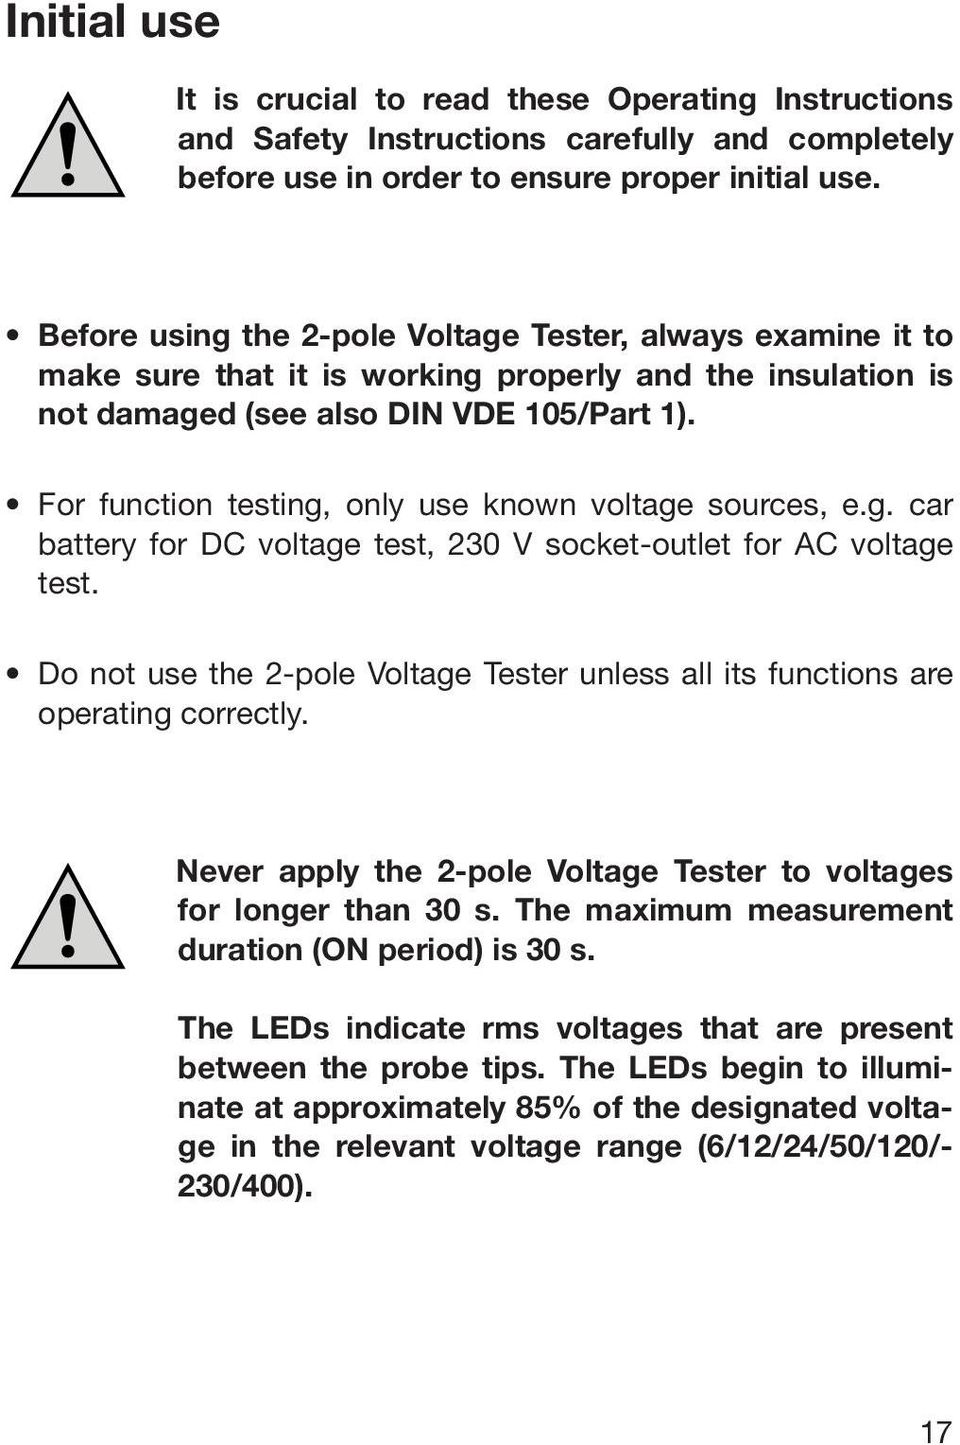 For function testing, only use known voltage sources, e.g. car battery for DC voltage test, 230 V socket-outlet for AC voltage test.